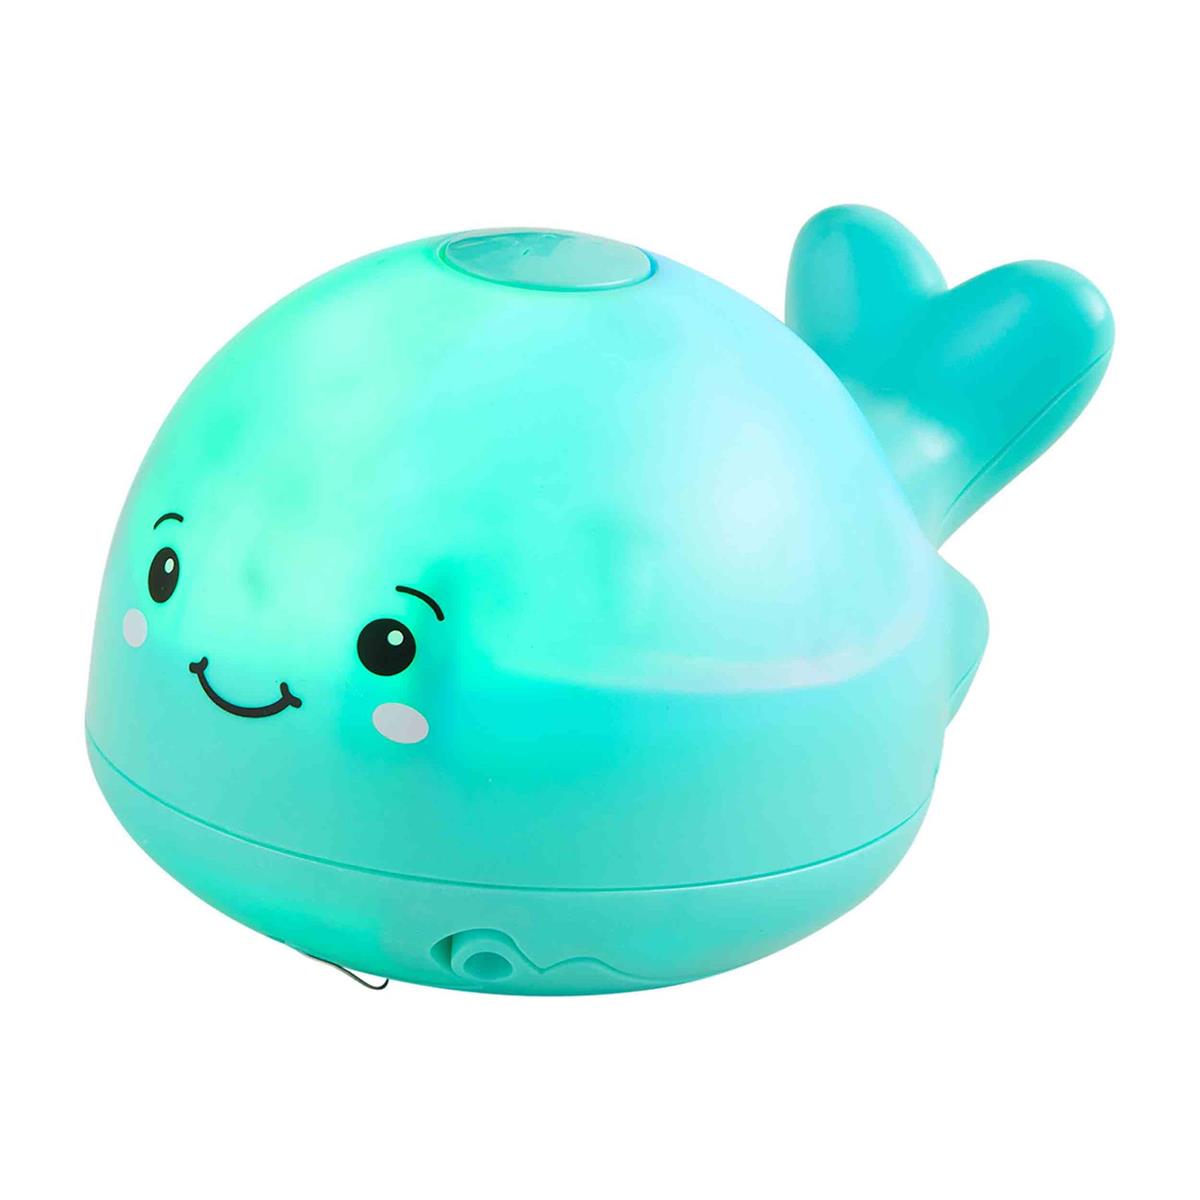 Blue Light-Up Spray Whale Bath Toy